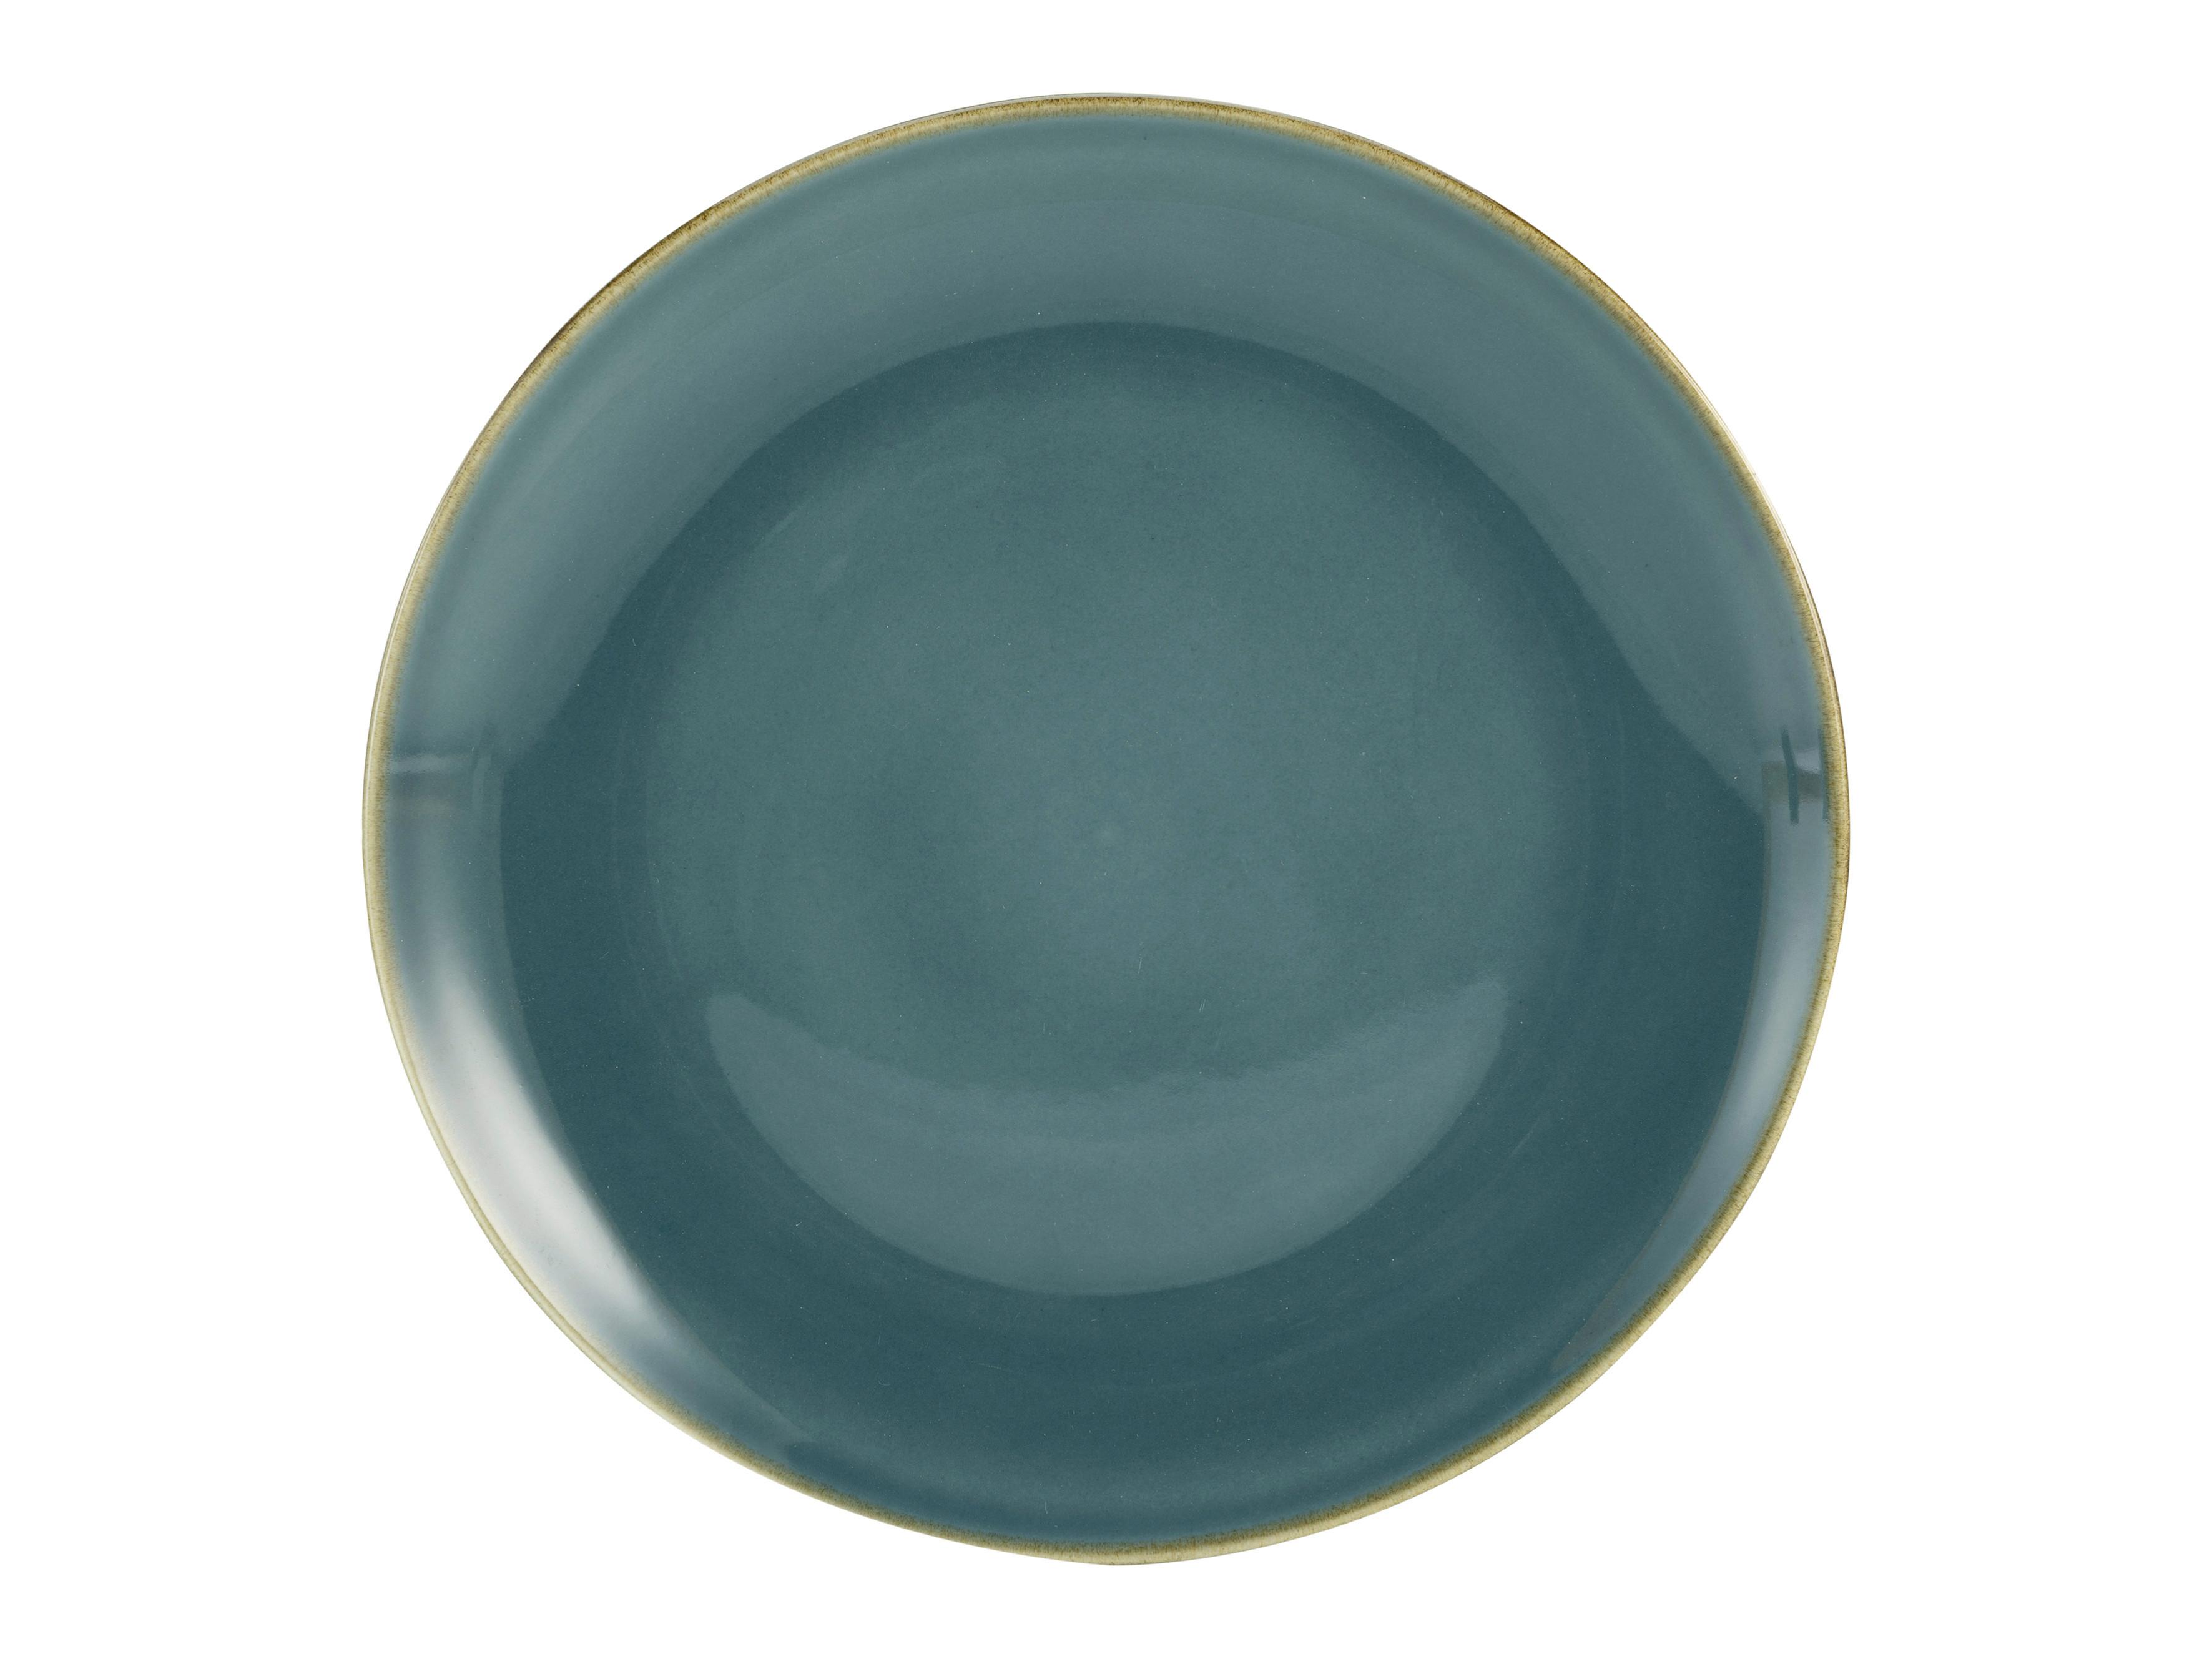 TALERZ OBIADOWY LINEN - niebieski, ceramika (28/28/3cm) - Premium Living